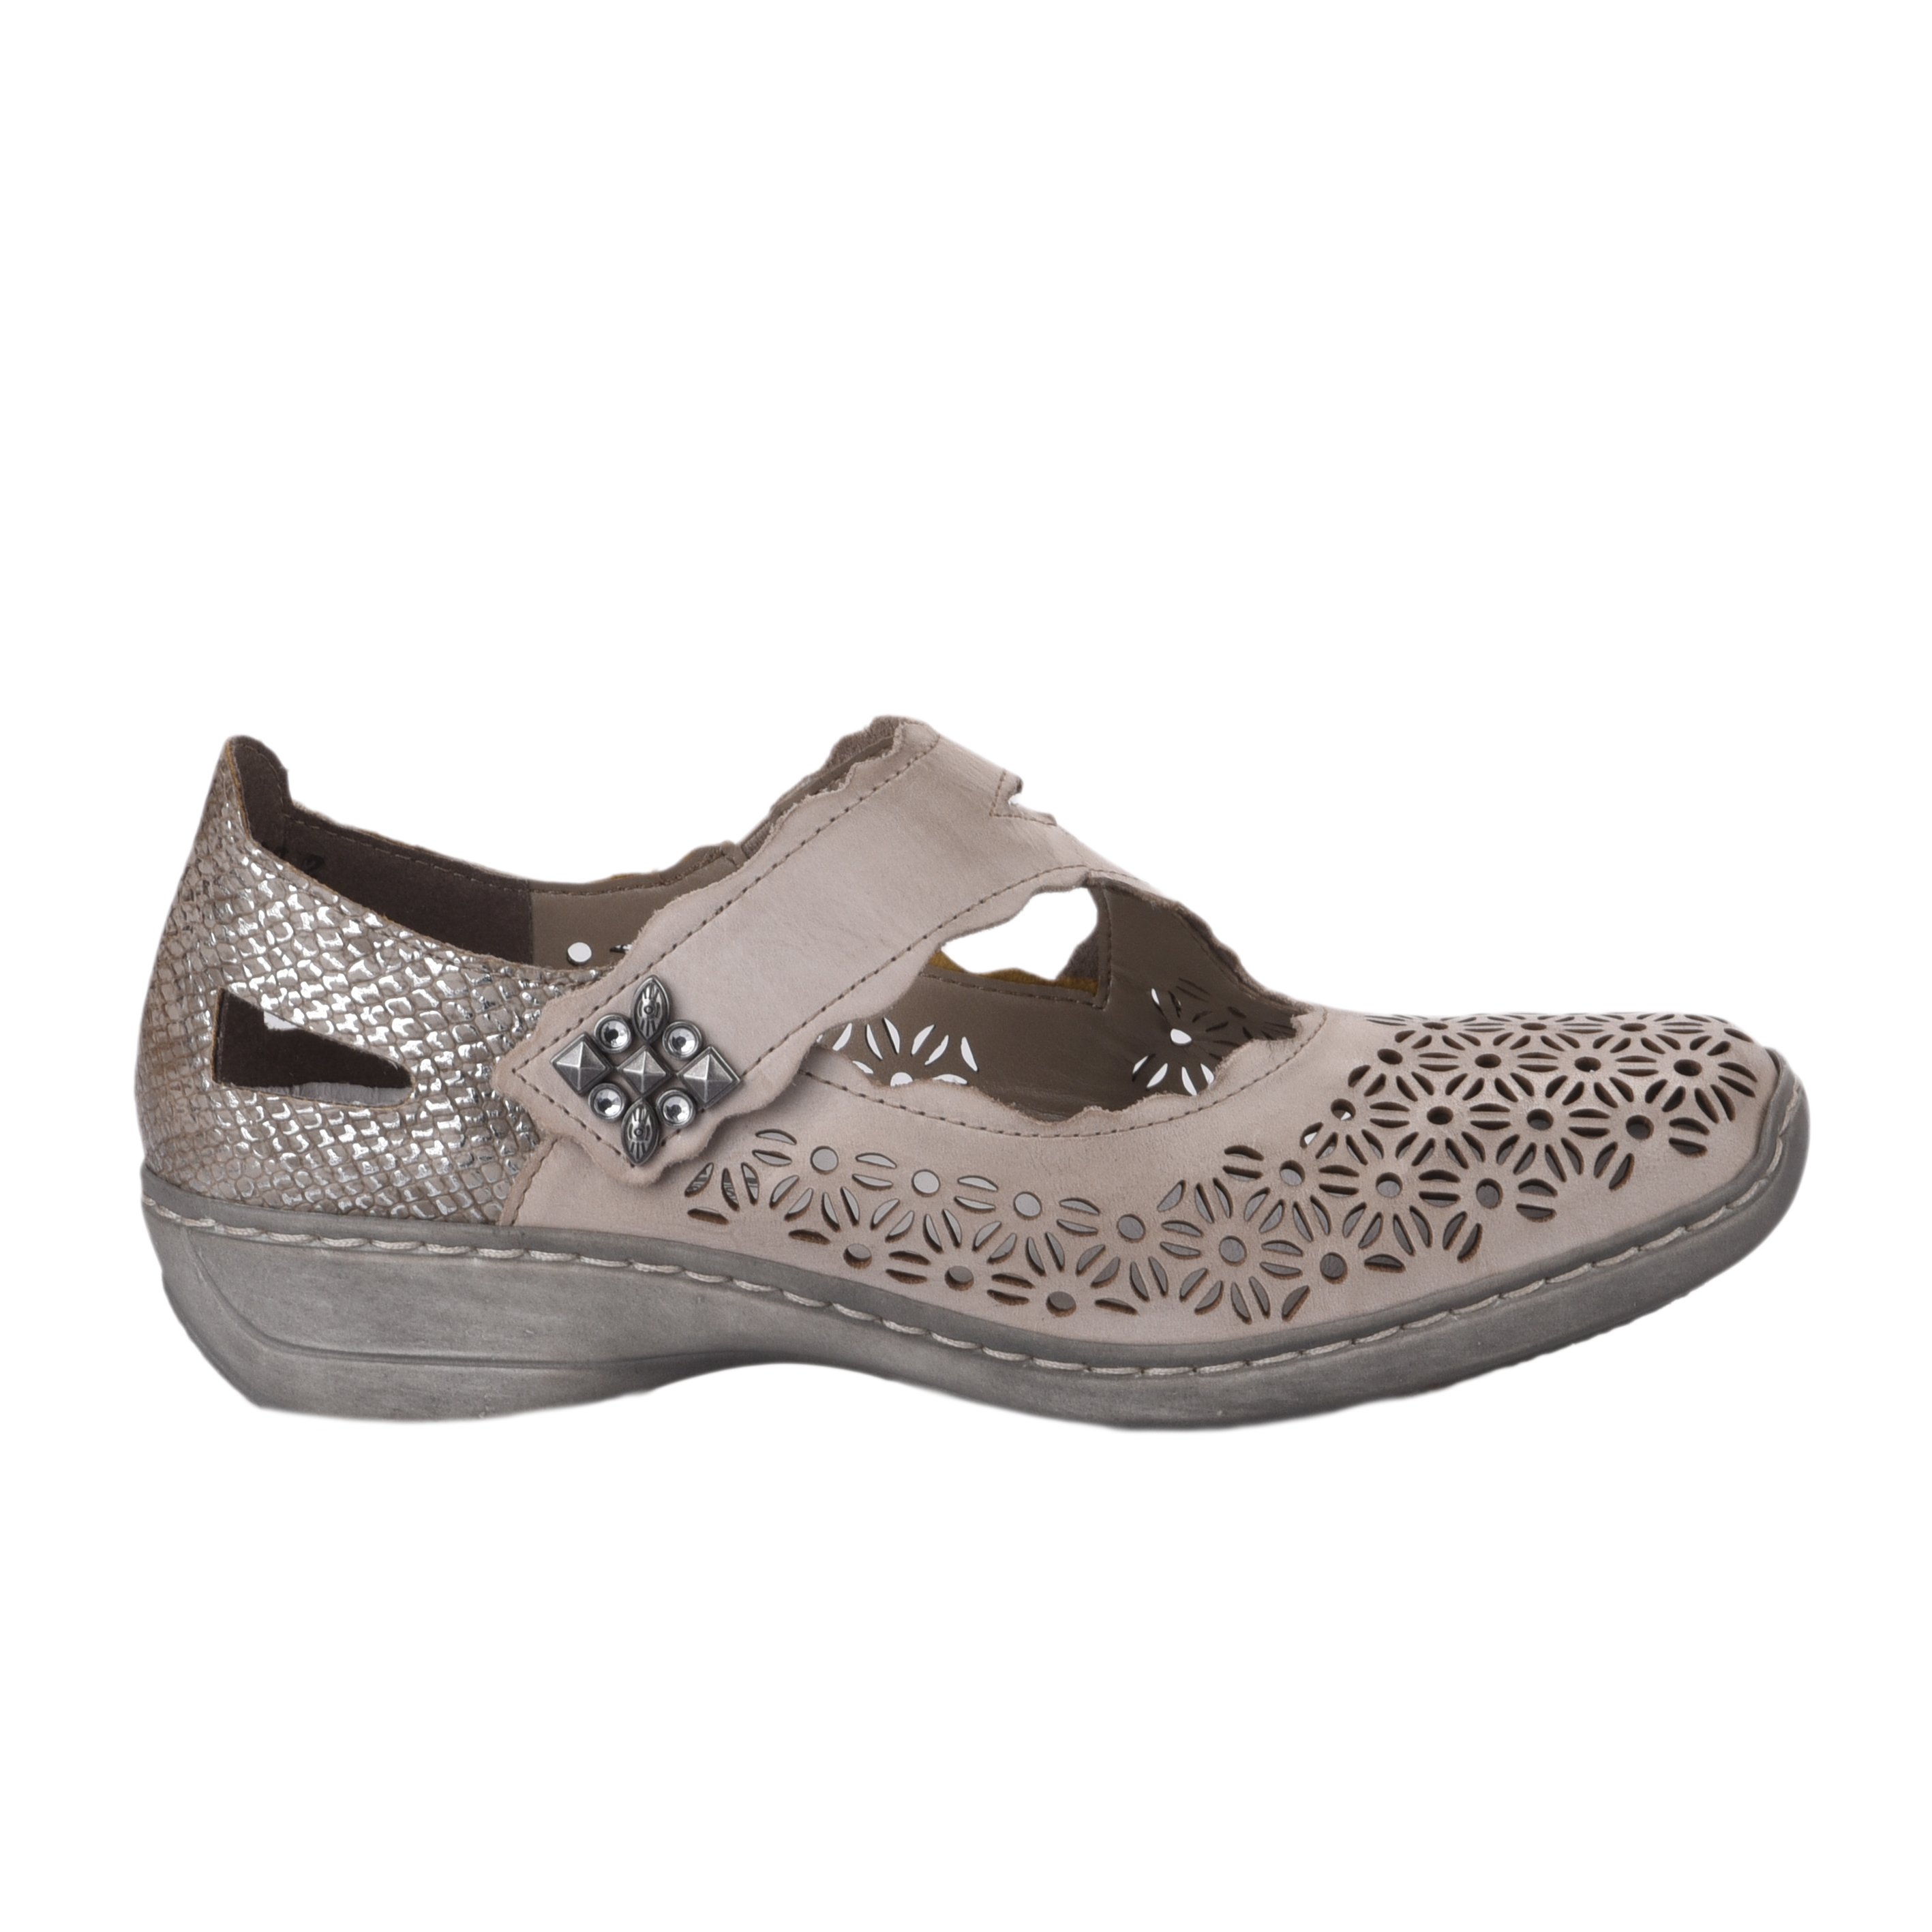 Chaussures de confort Rieker taupe femme - 413G4-42 - 78014